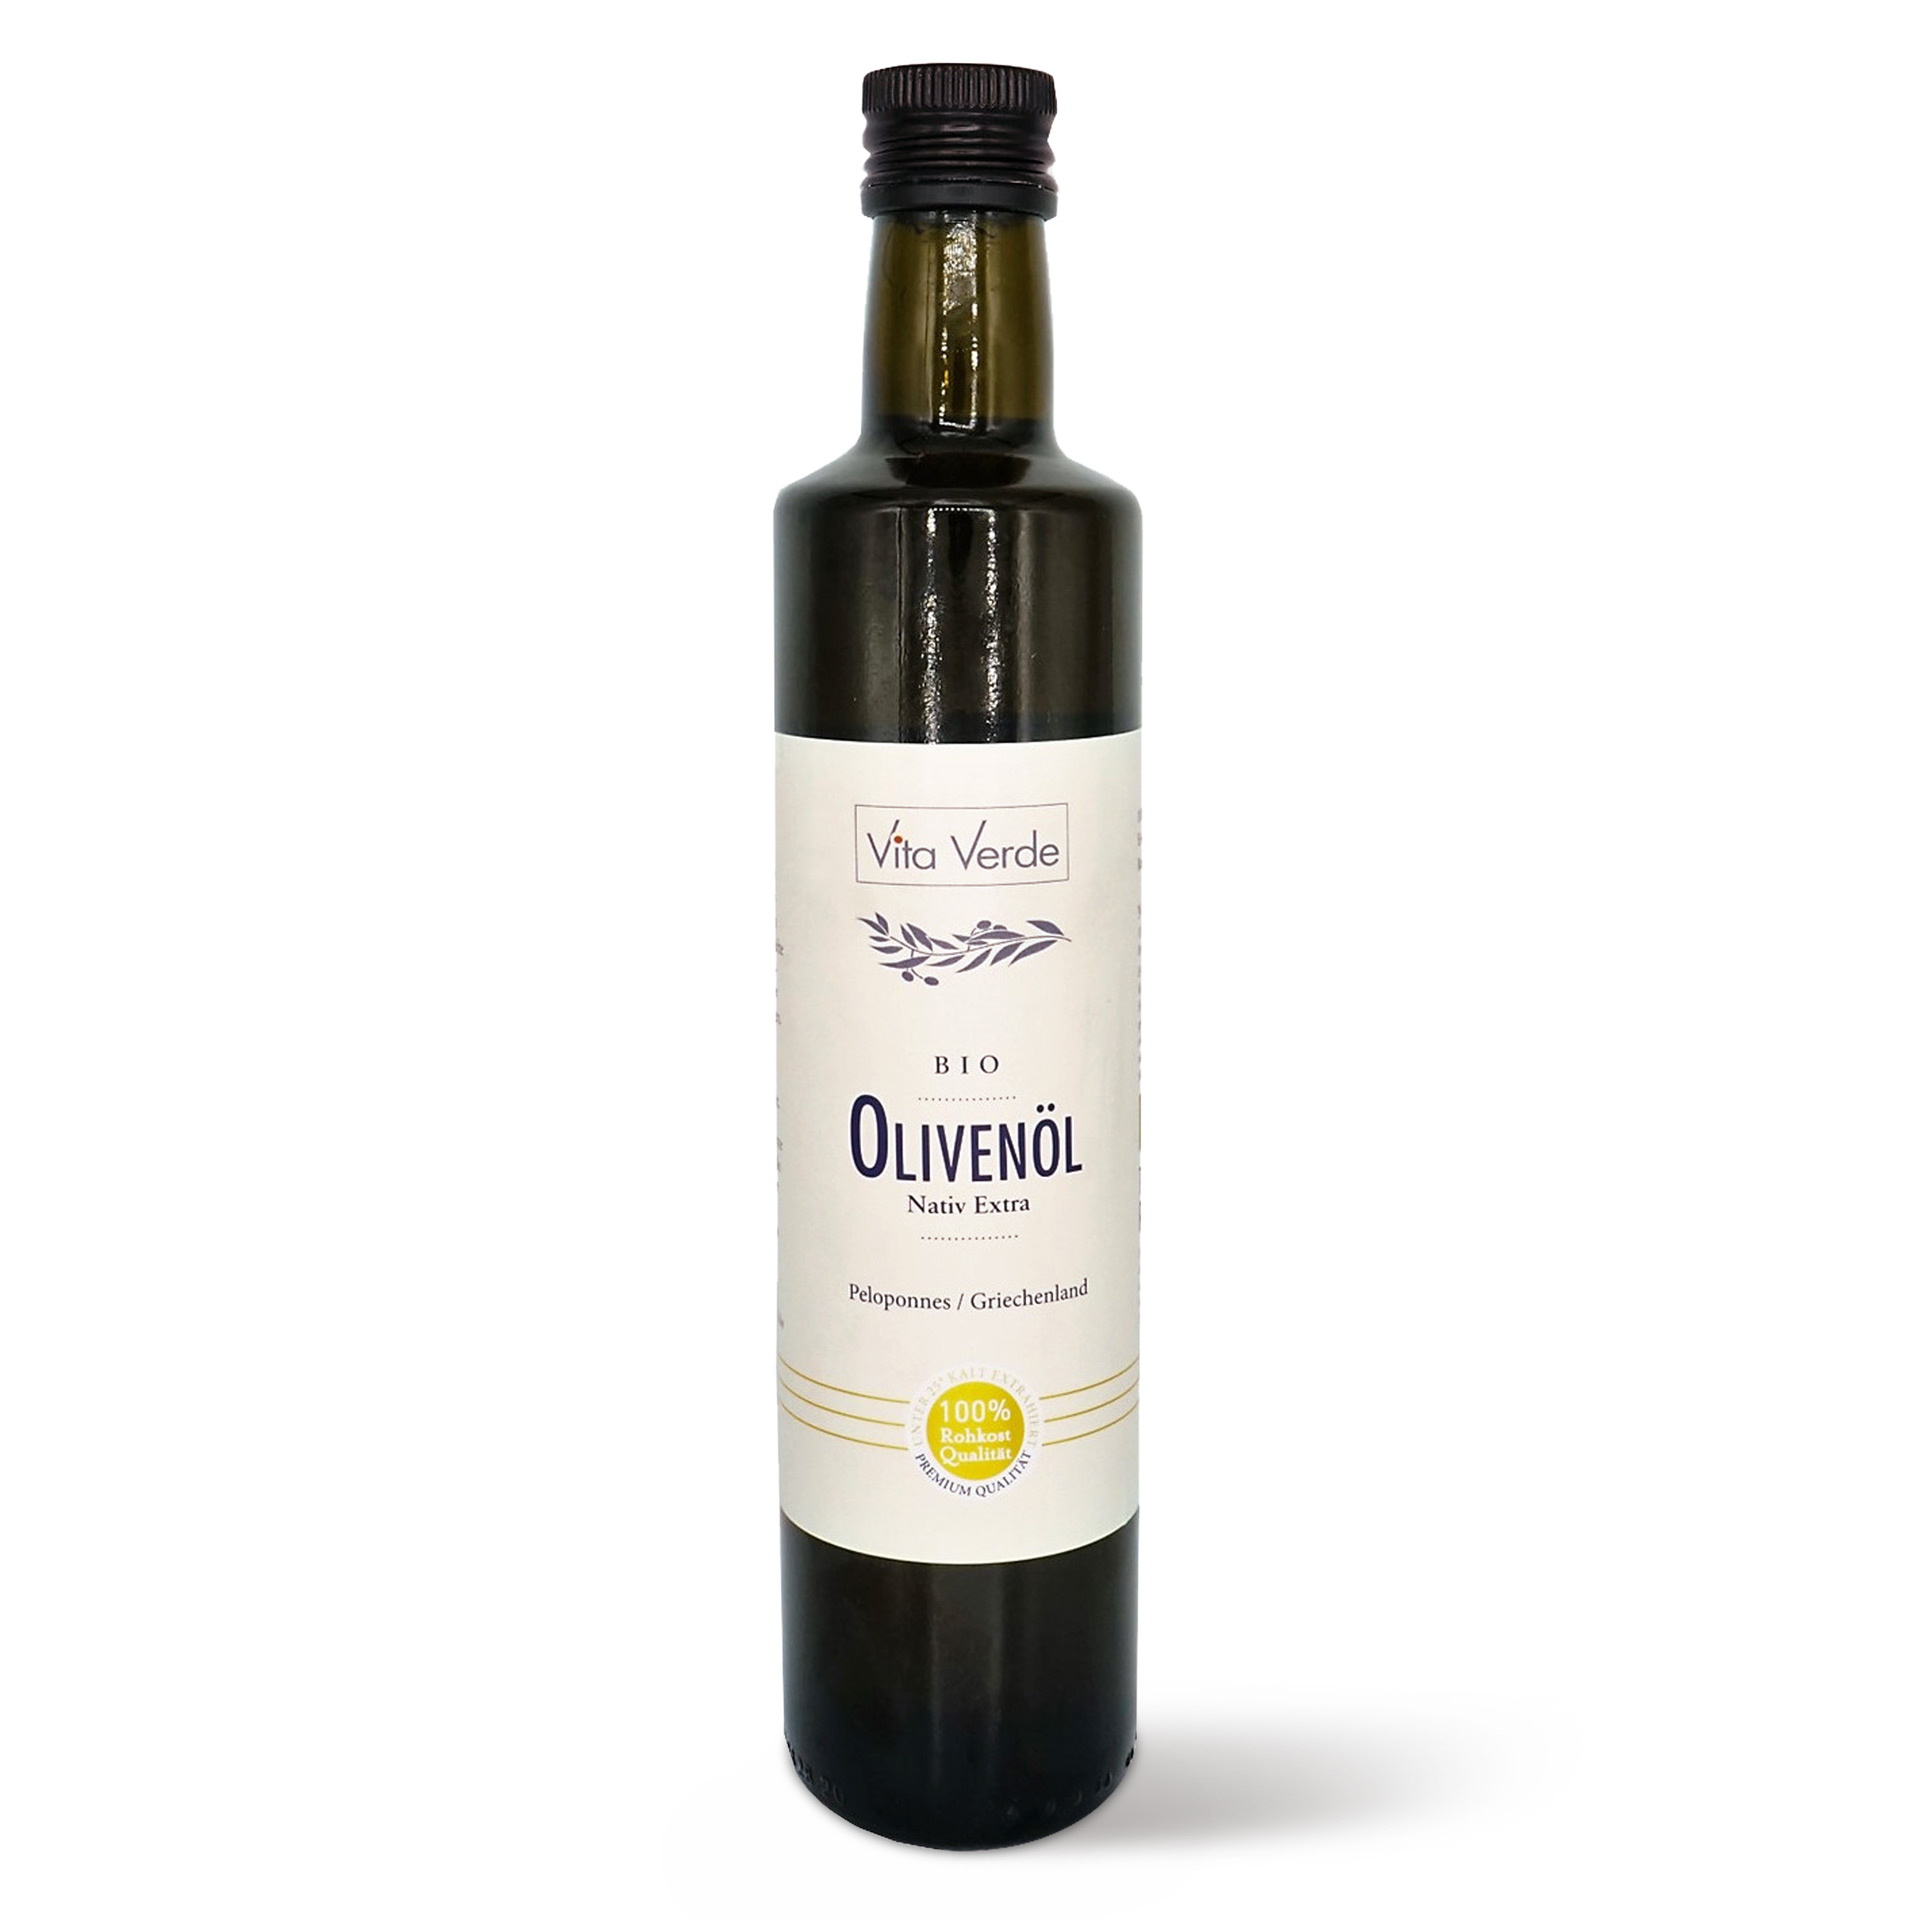 Vita Verde BIO Olivenöl Peloponnes extra nativ in Rohkost Qualität